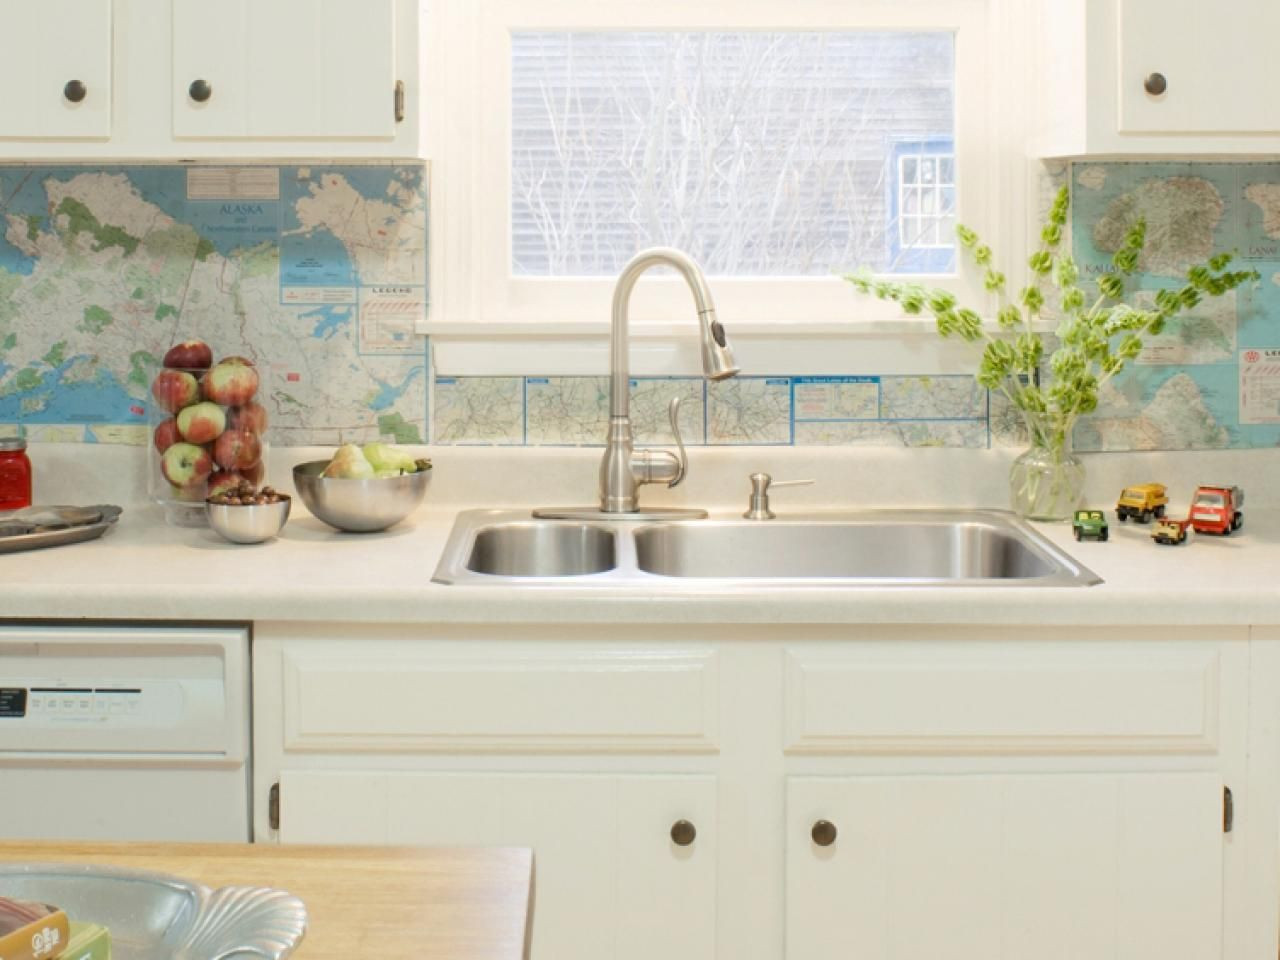 Kitchen Backsplash Diy
 Top 20 DIY Kitchen Backsplash Ideas